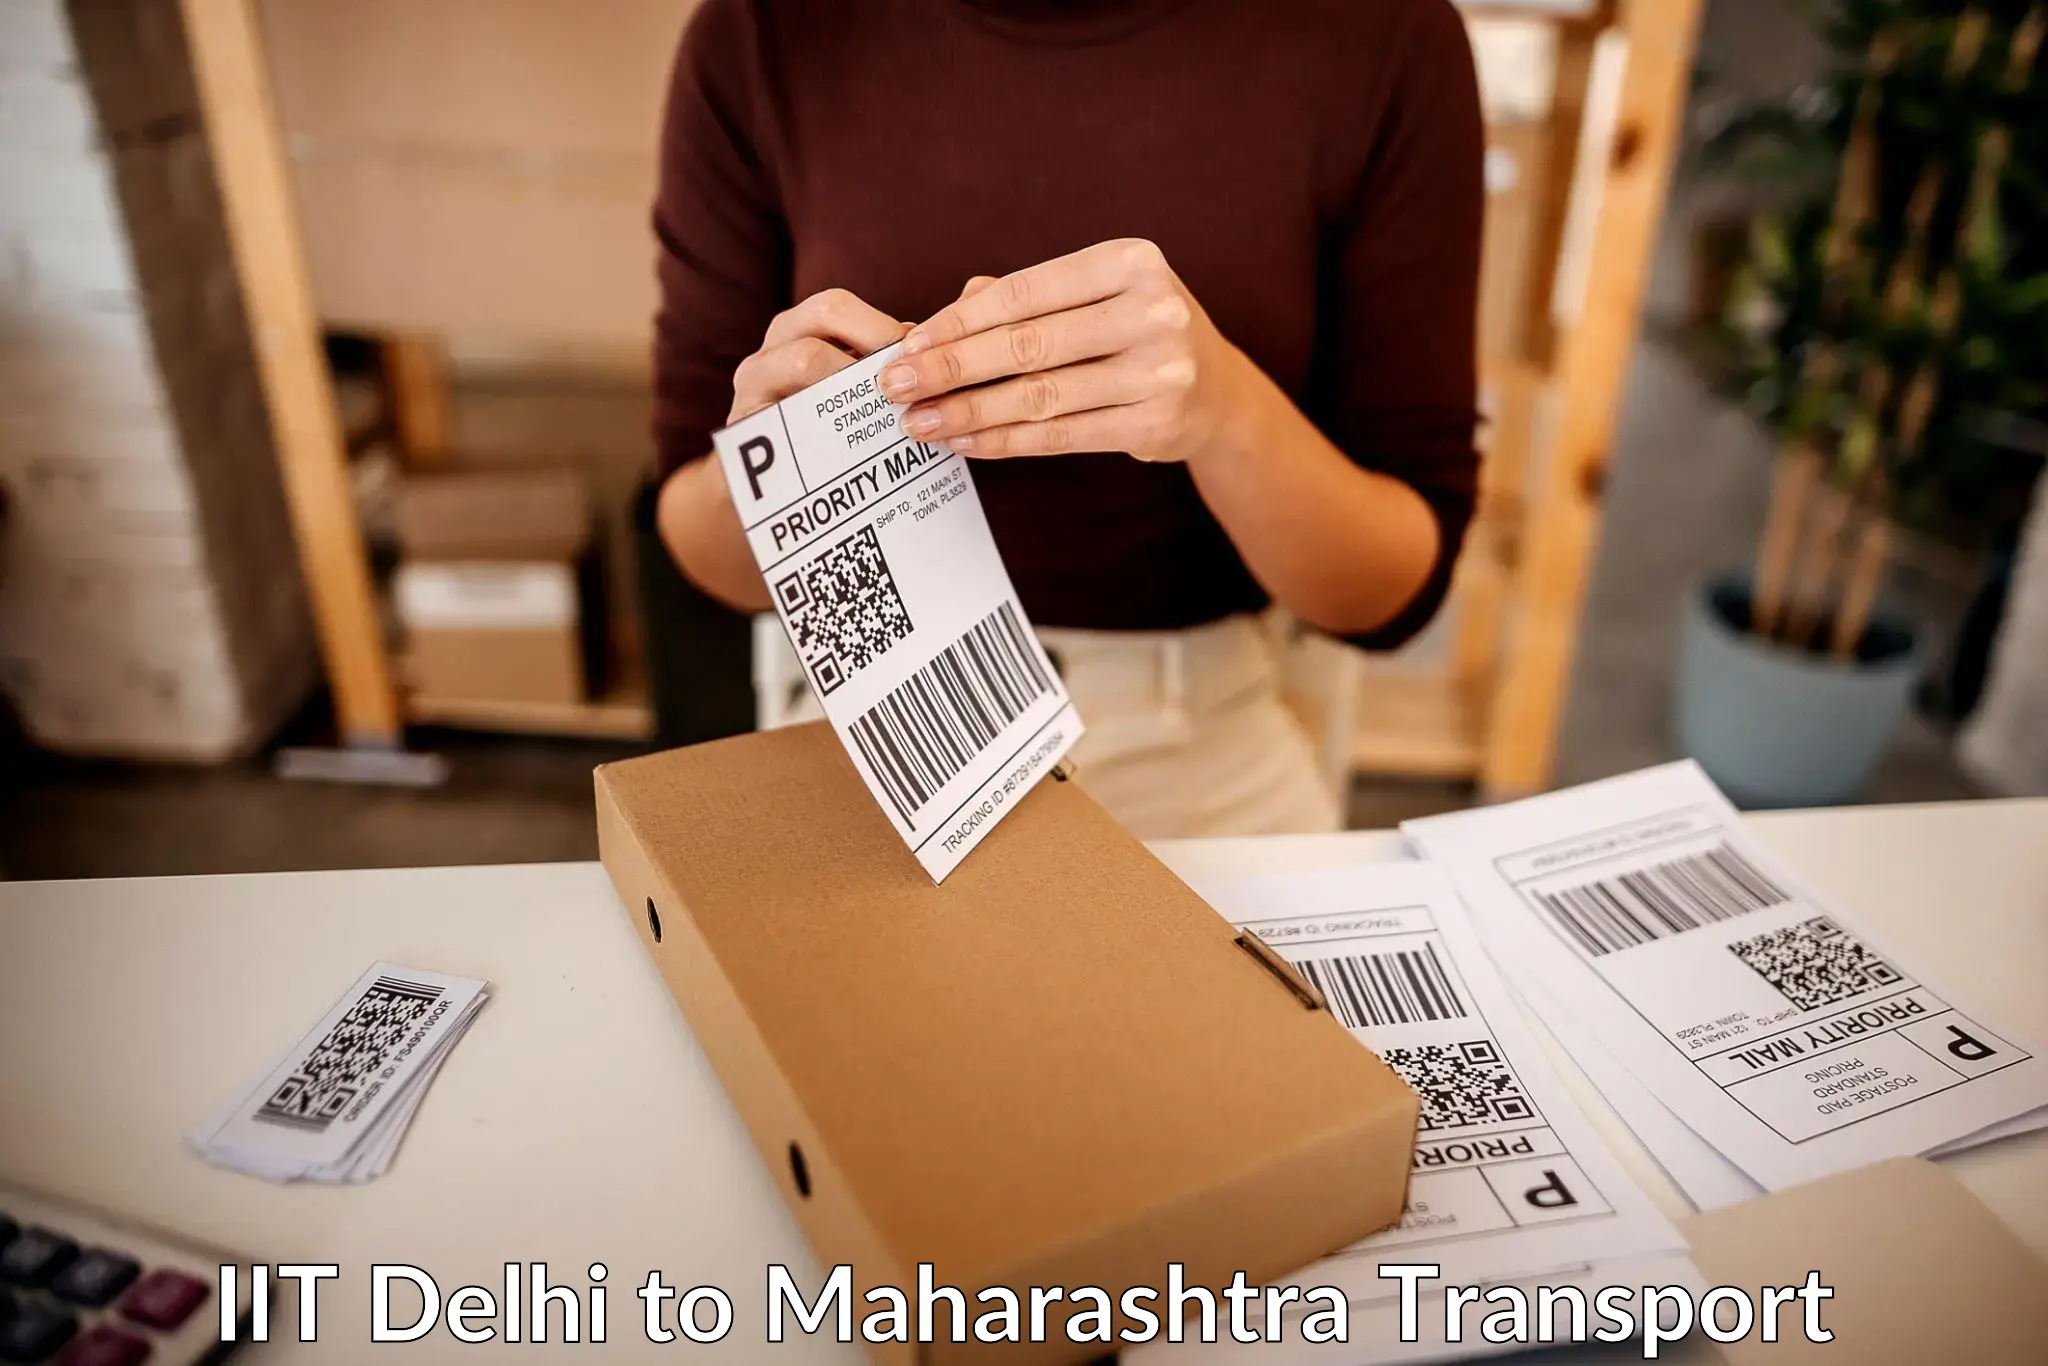 Goods delivery service IIT Delhi to Vasai